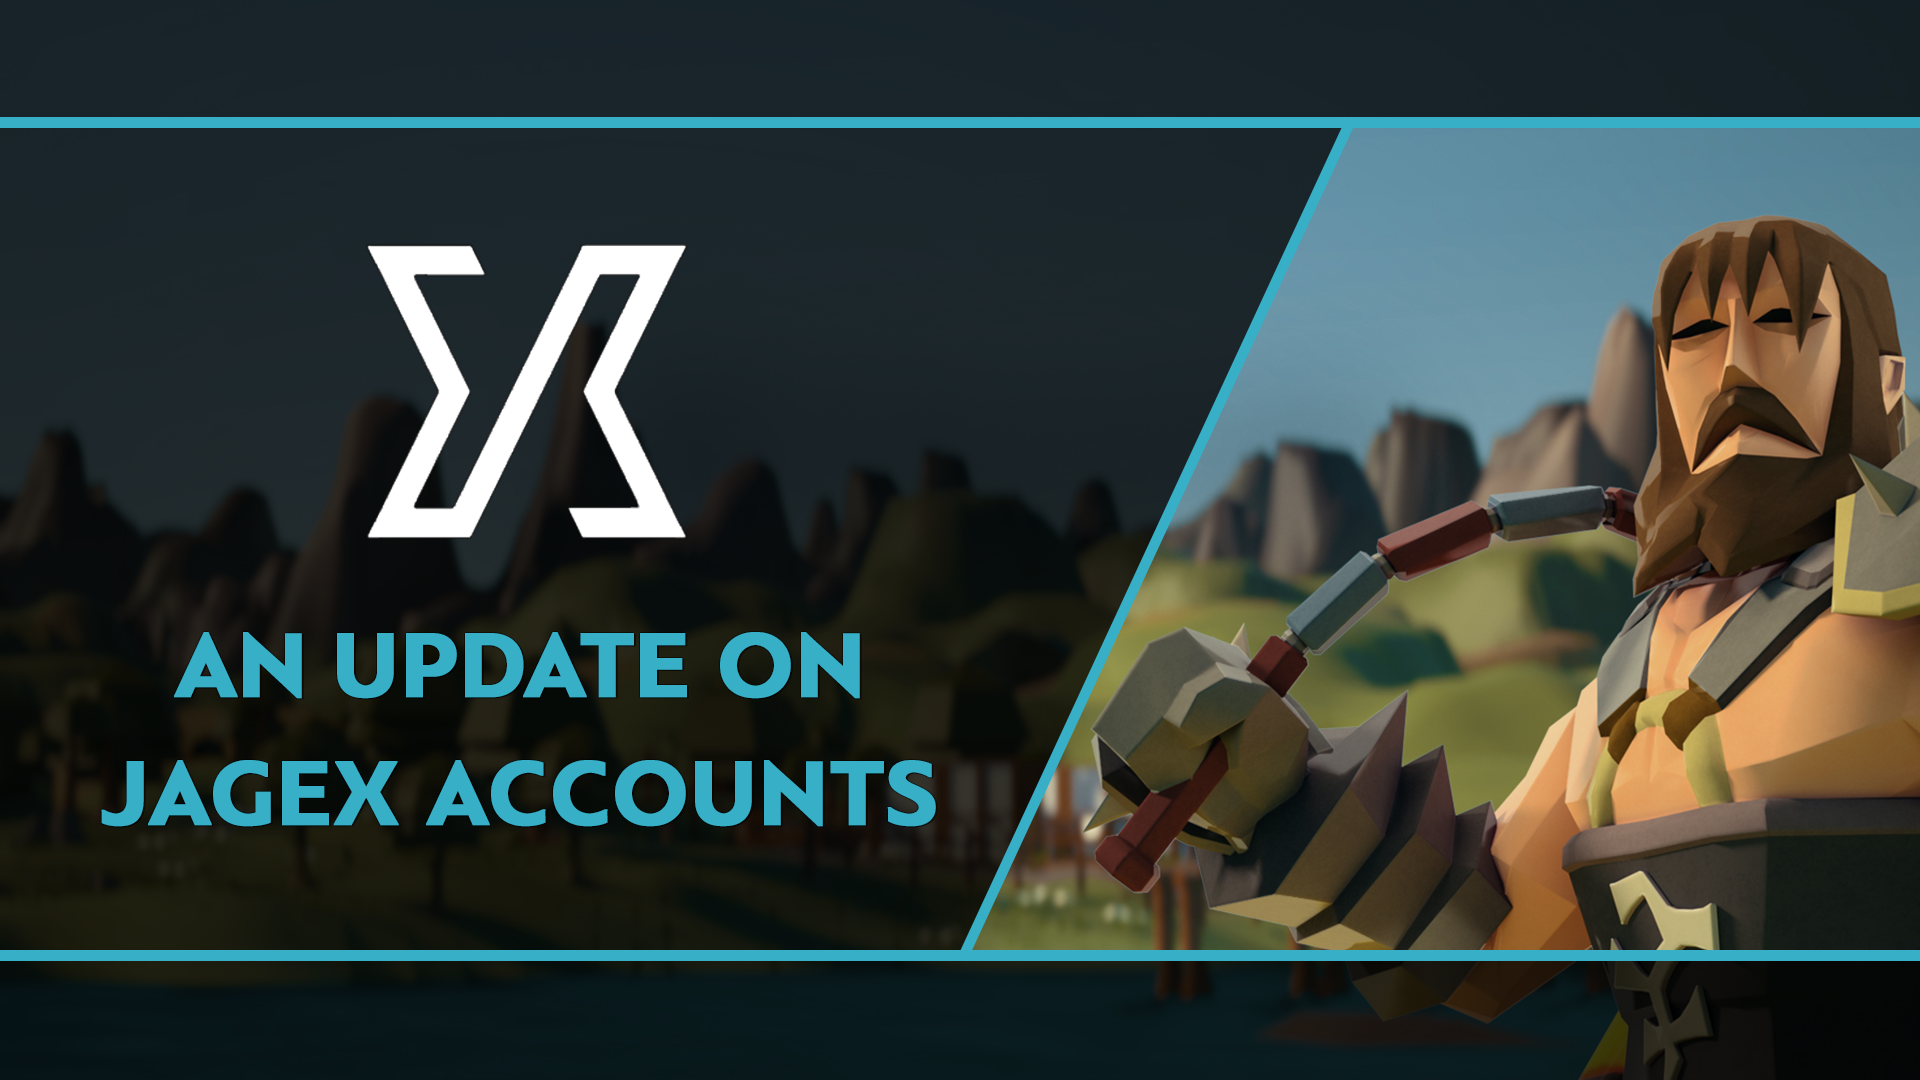 An Update on Jagex Accounts